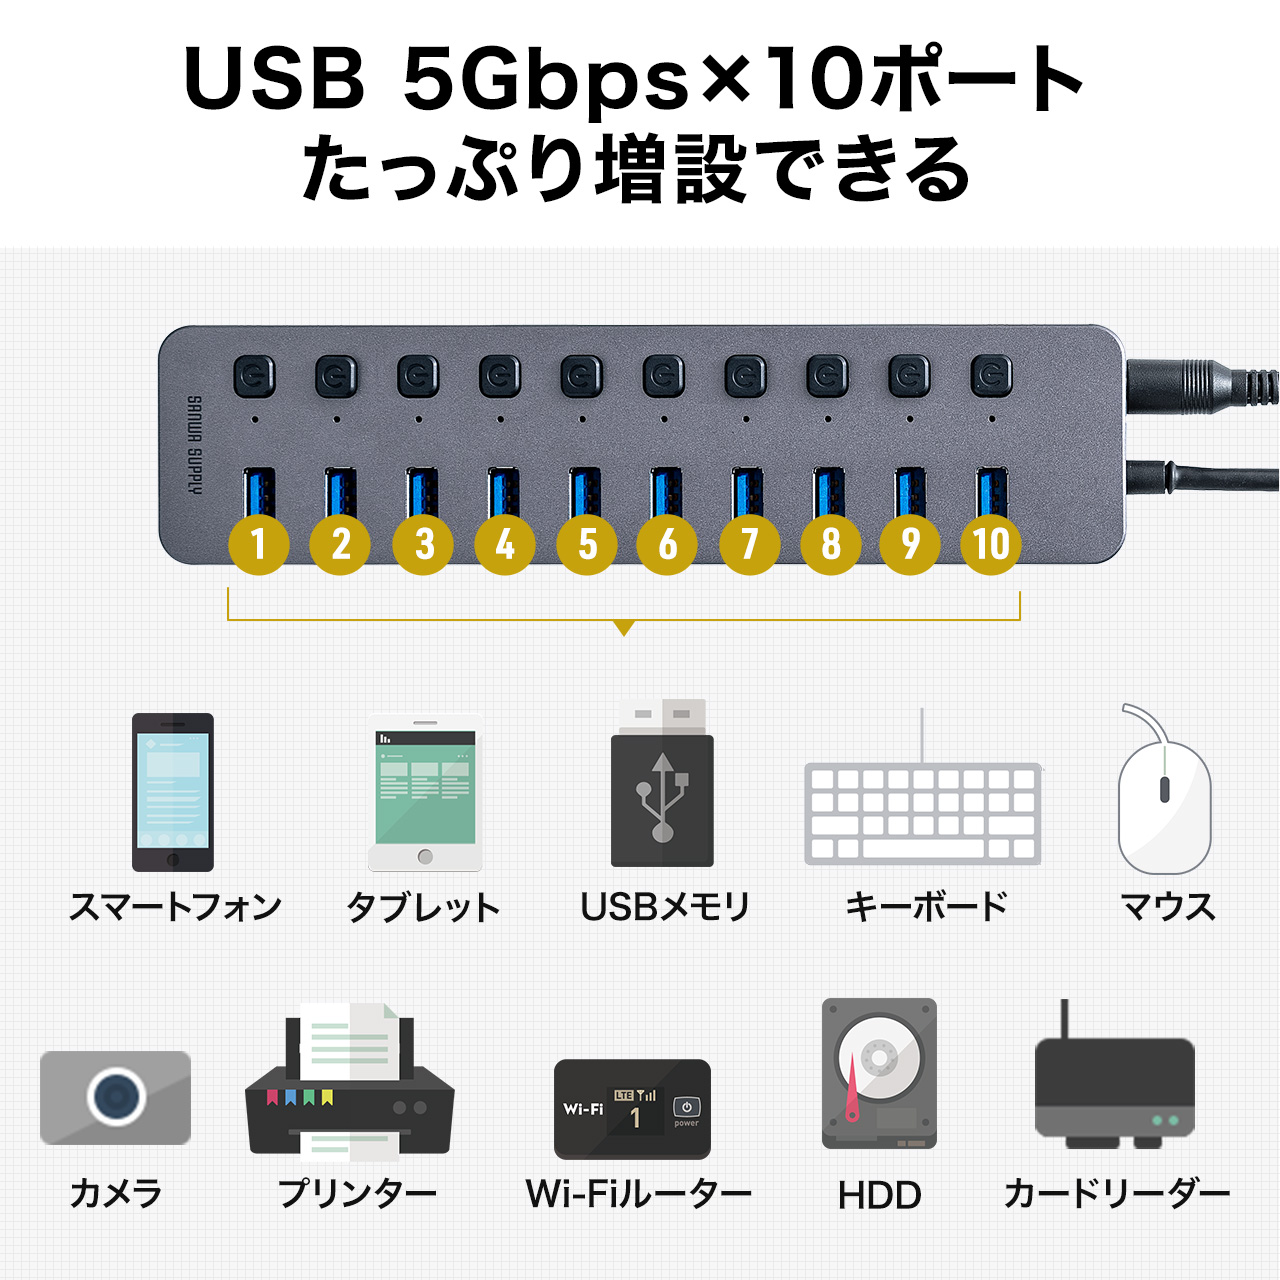 yAt^[Z[zUSBnu 10|[g ACA_v^t USB[d ʃXCb`t USB3.2/5Gbps 400-HUBA23GM